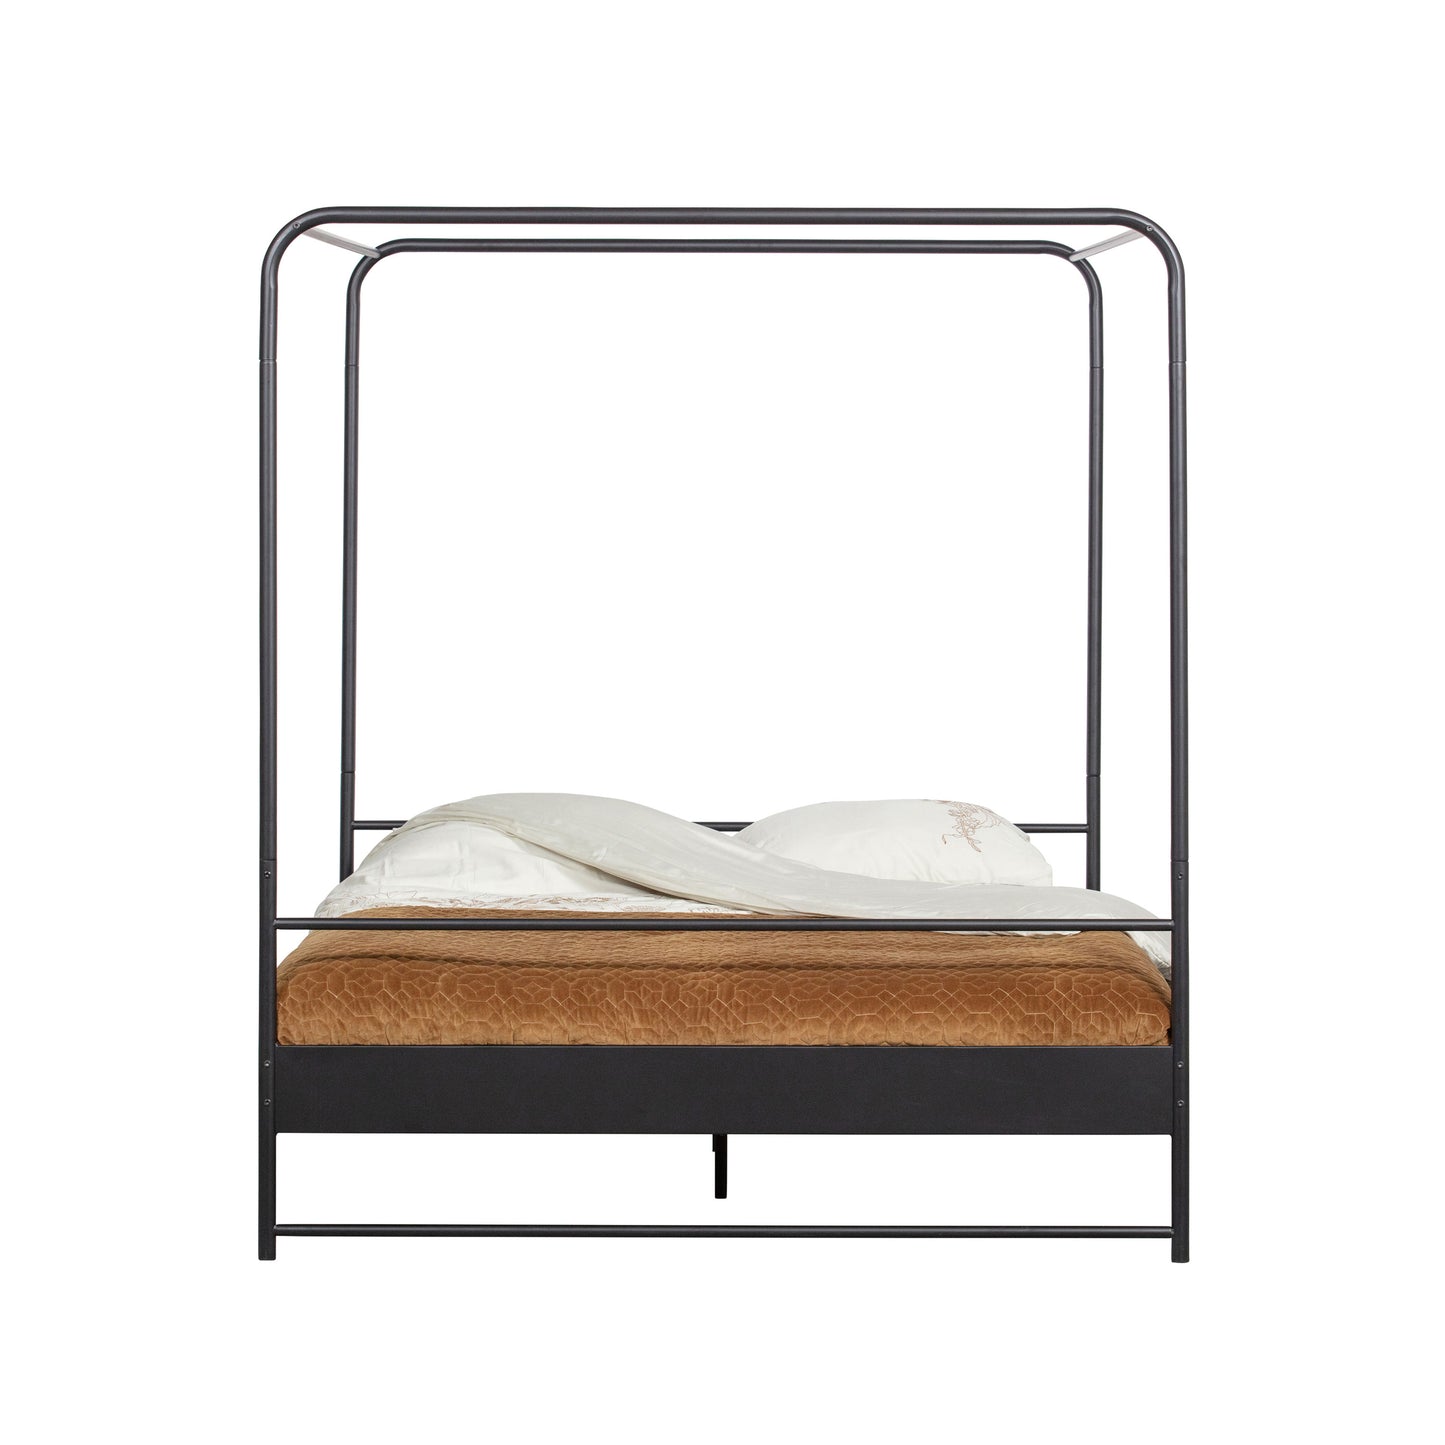 Bunk bed metal black 160x200 cm